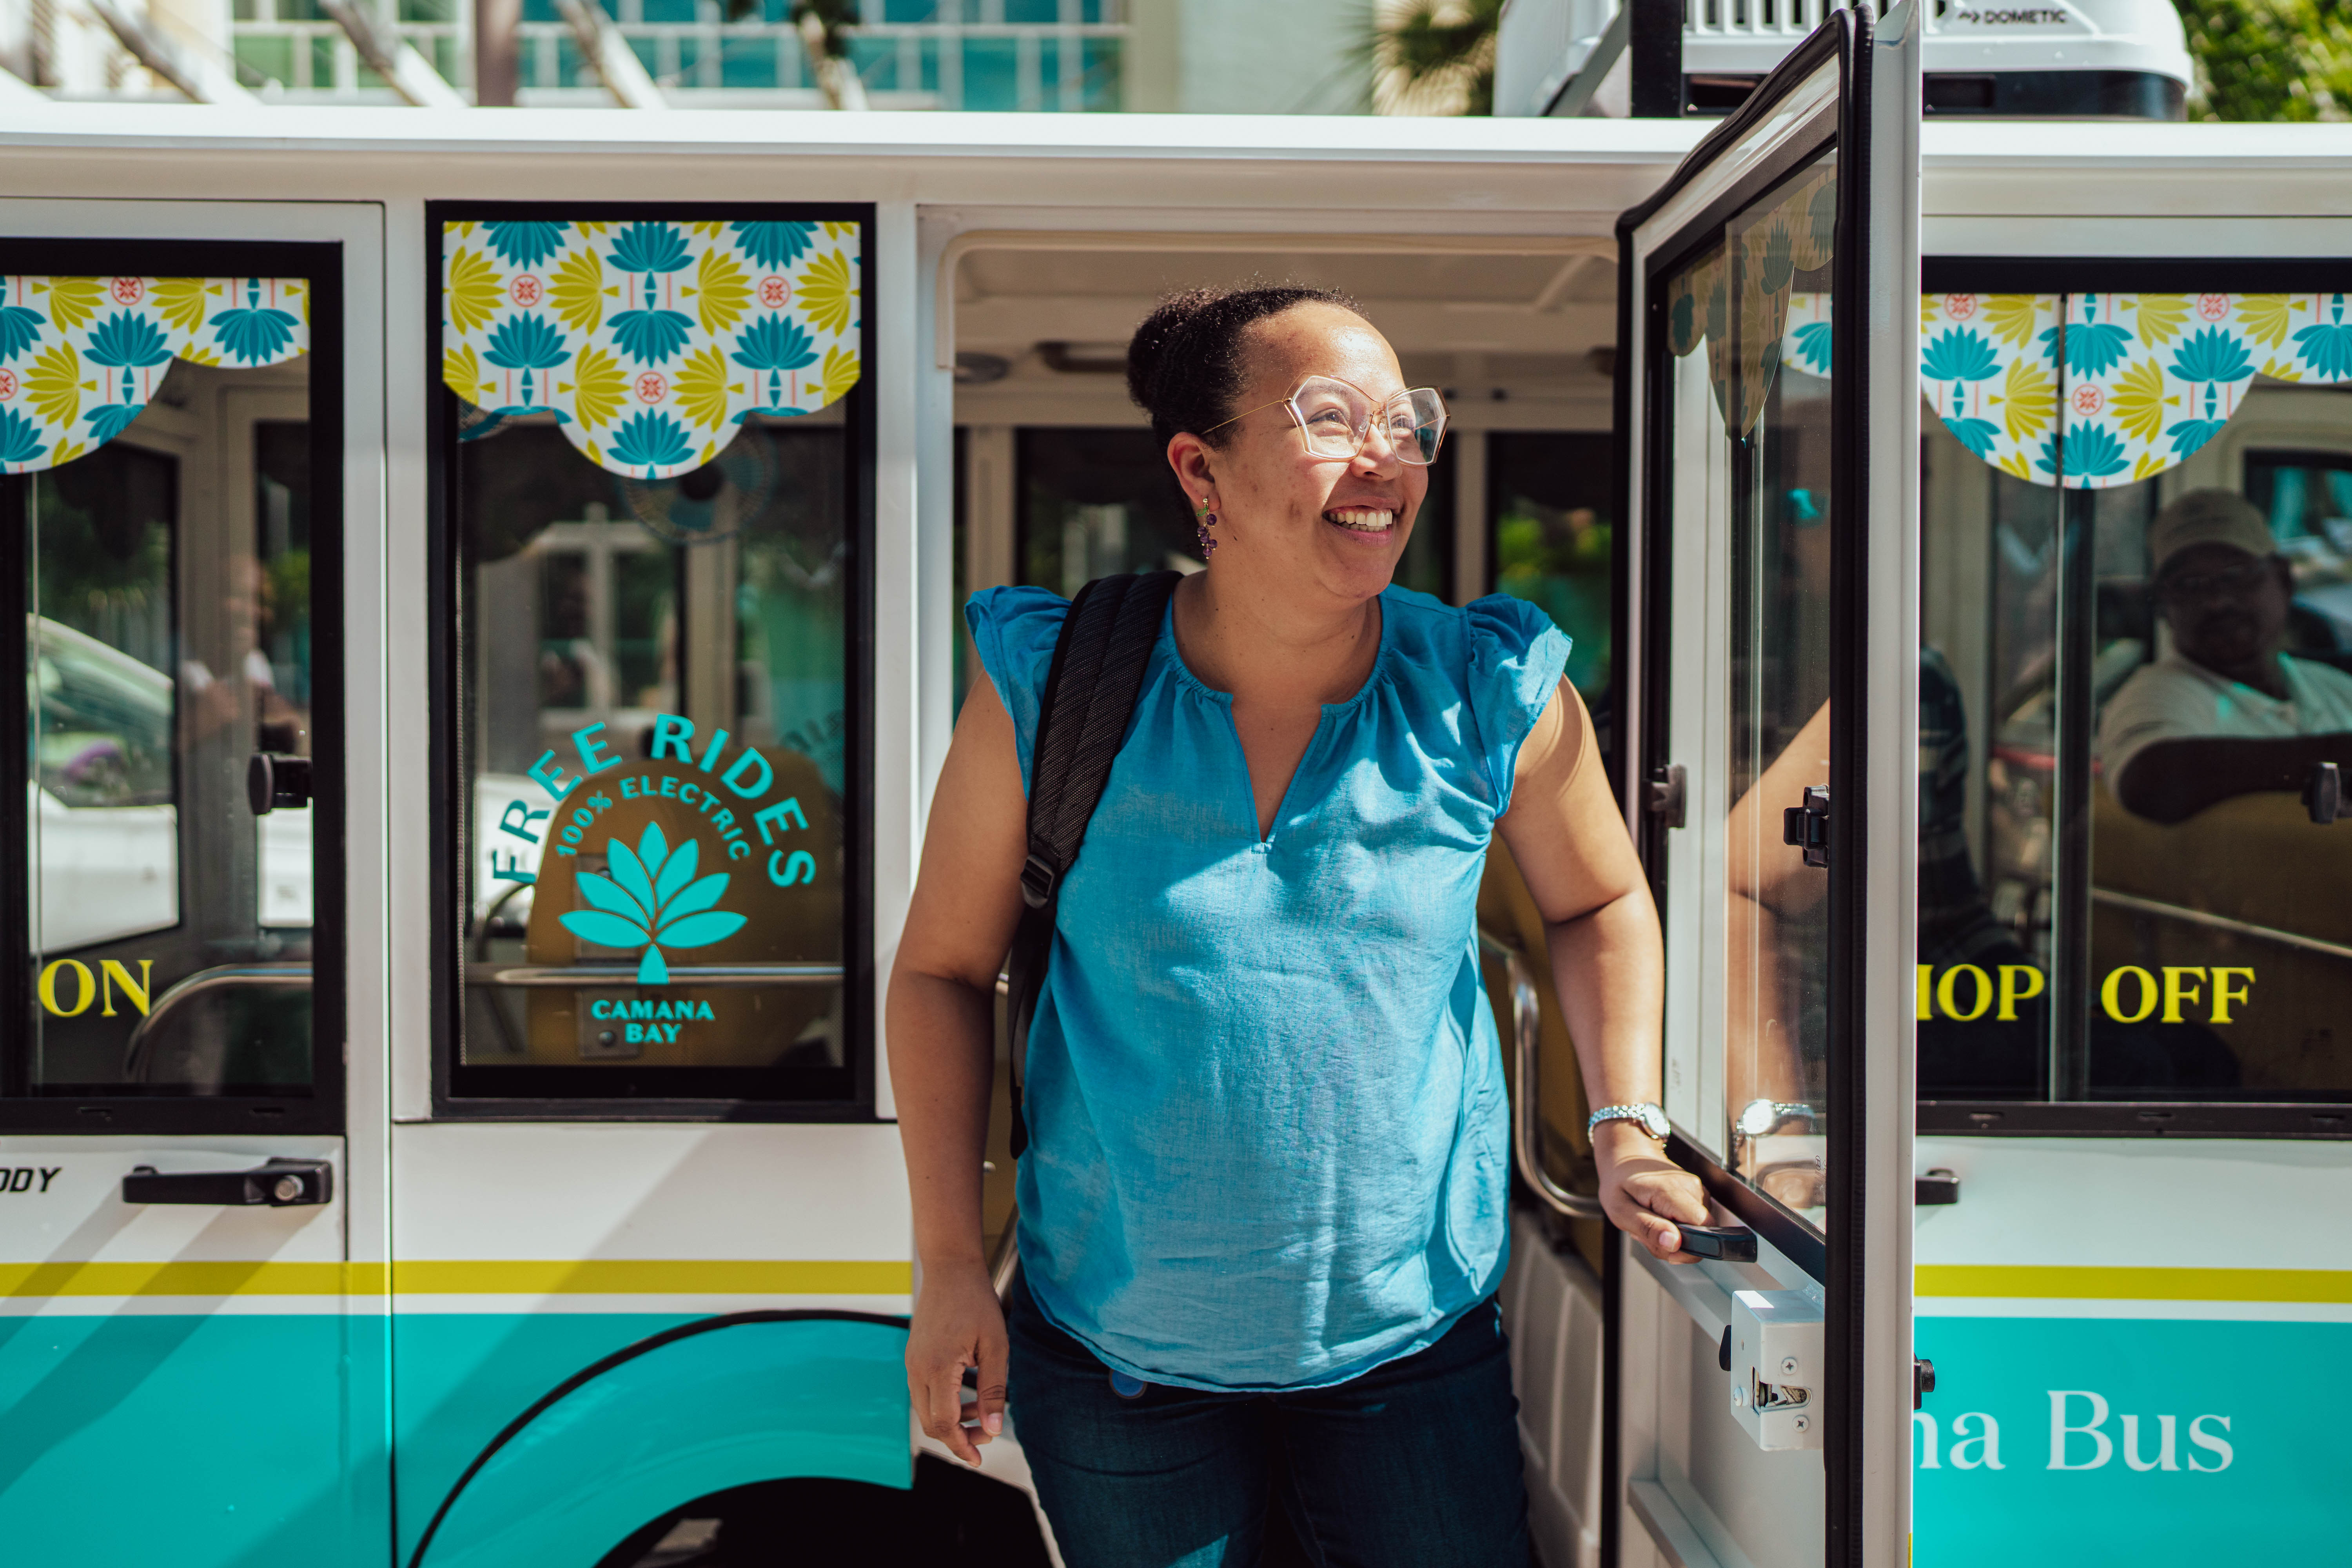 Camana Bus turns wheels on sustainable transport